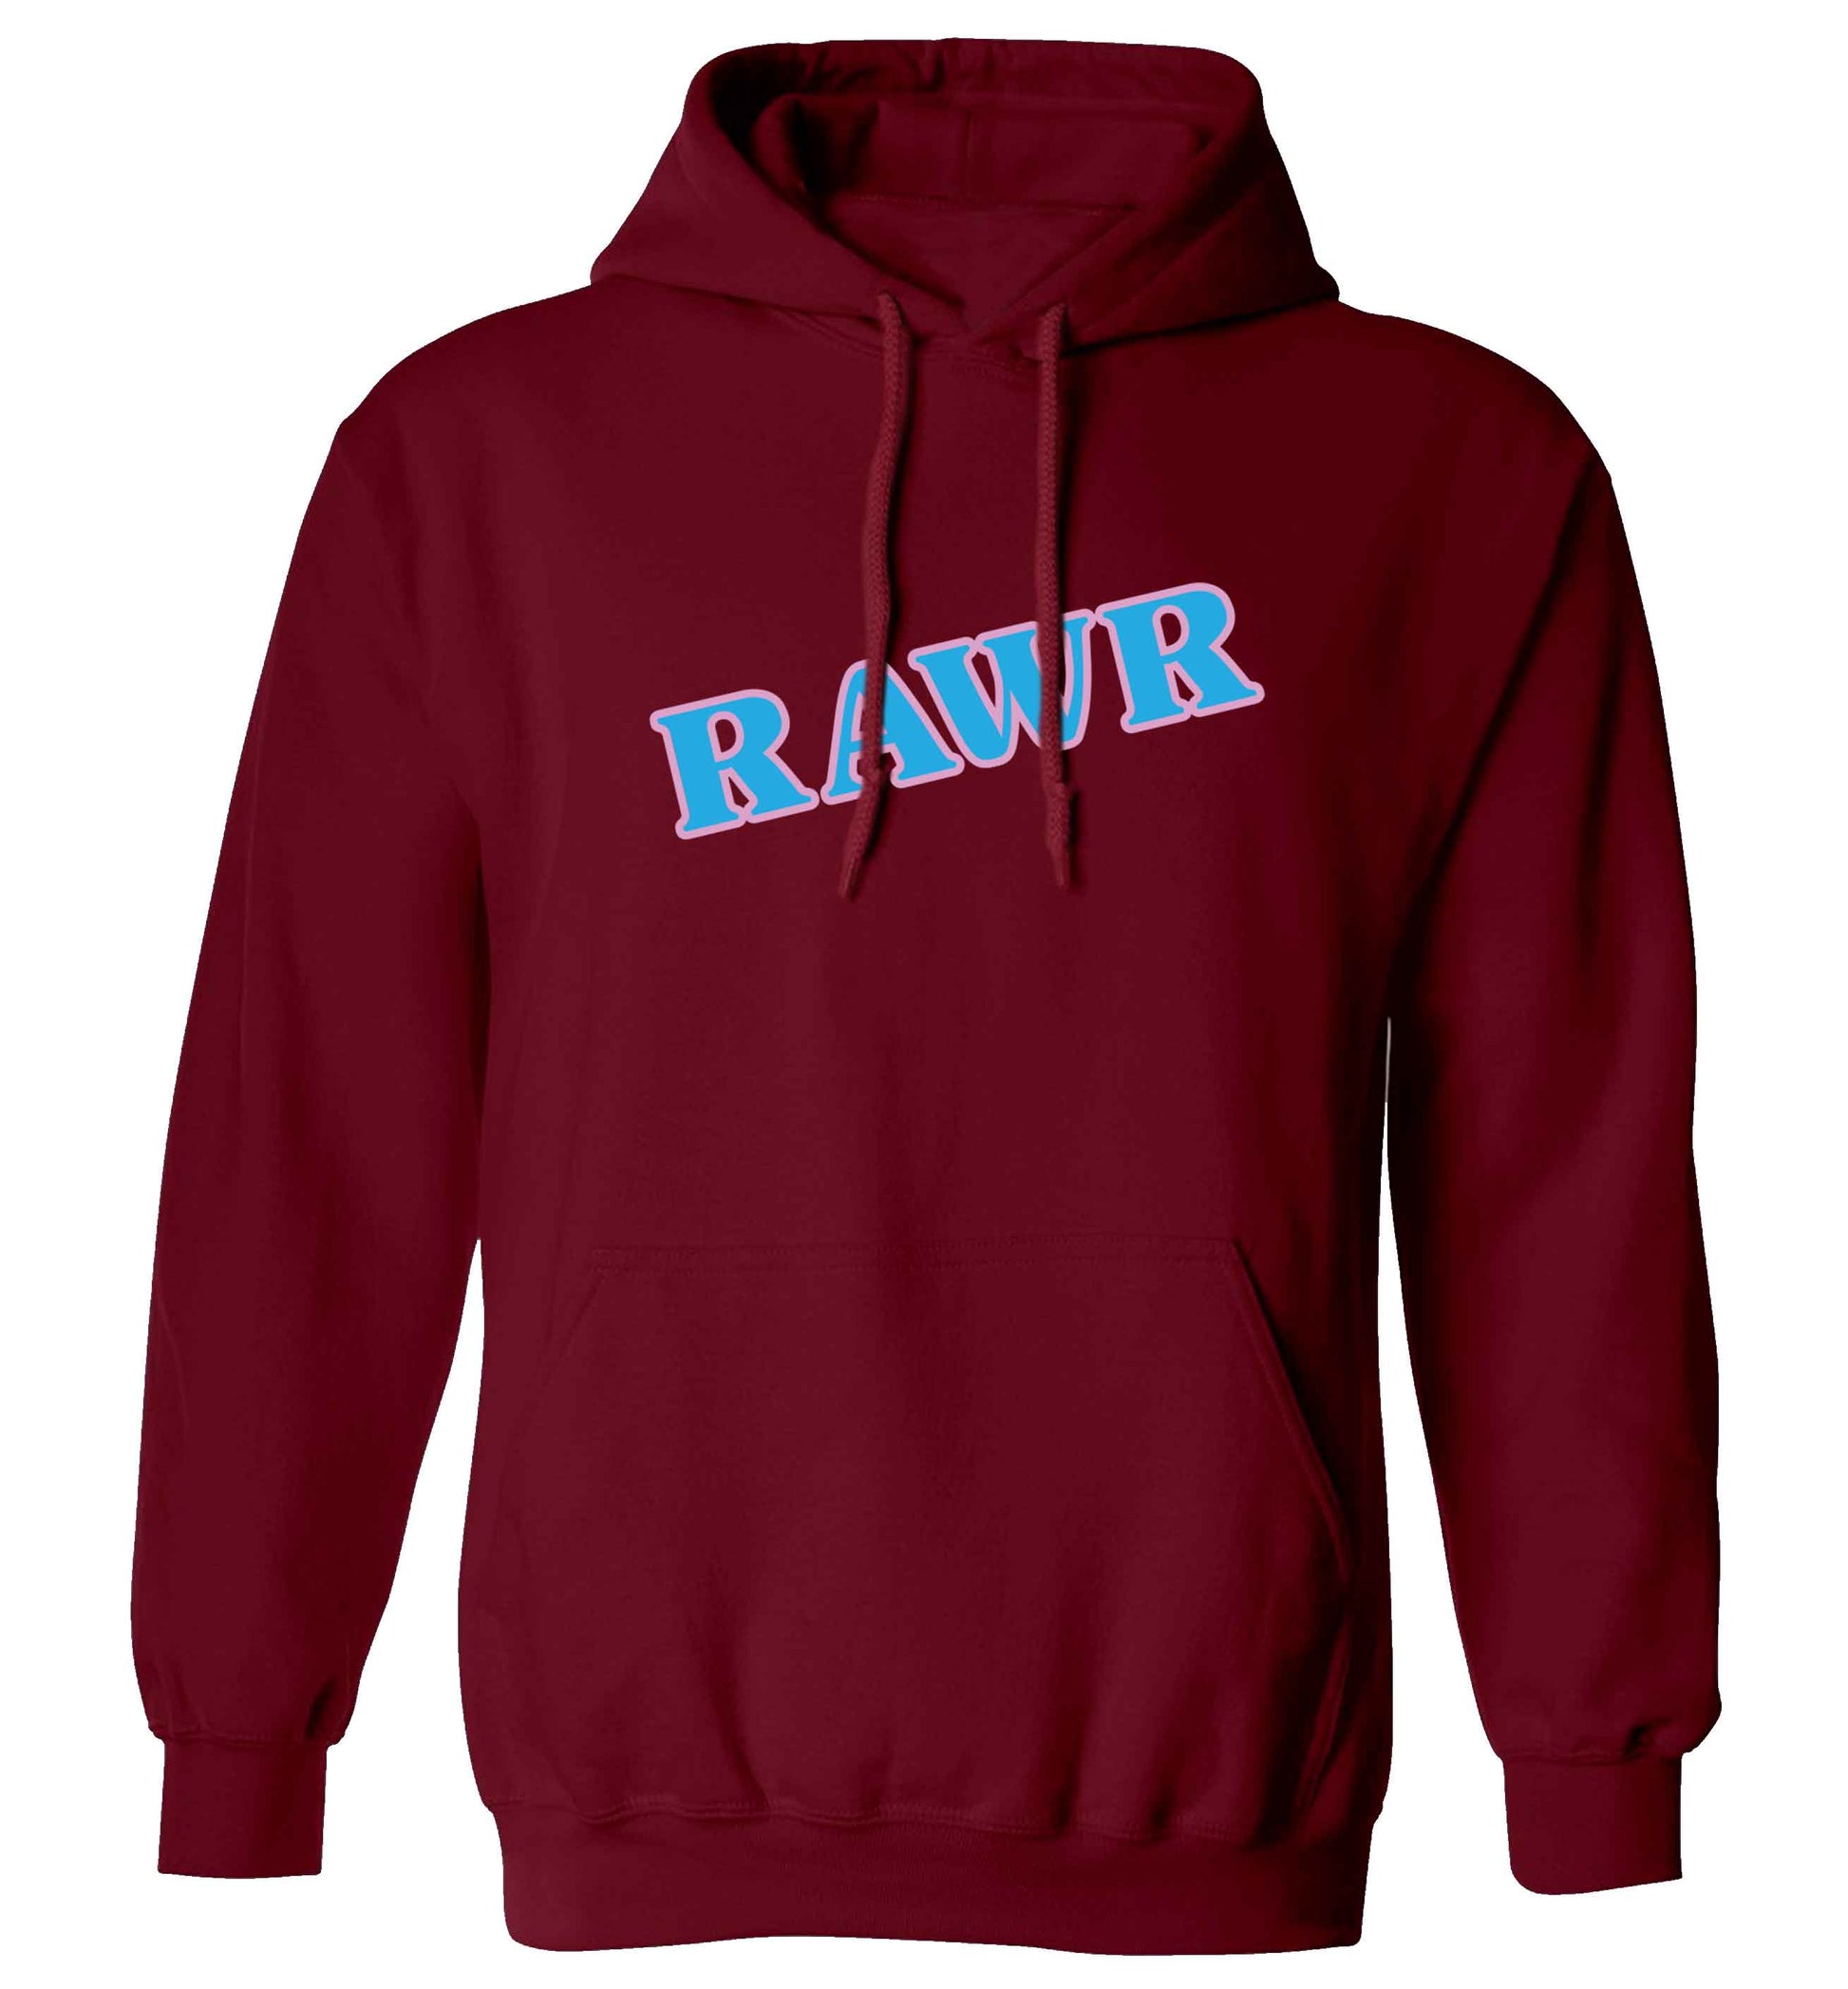 Rawr adults unisex maroon hoodie 2XL